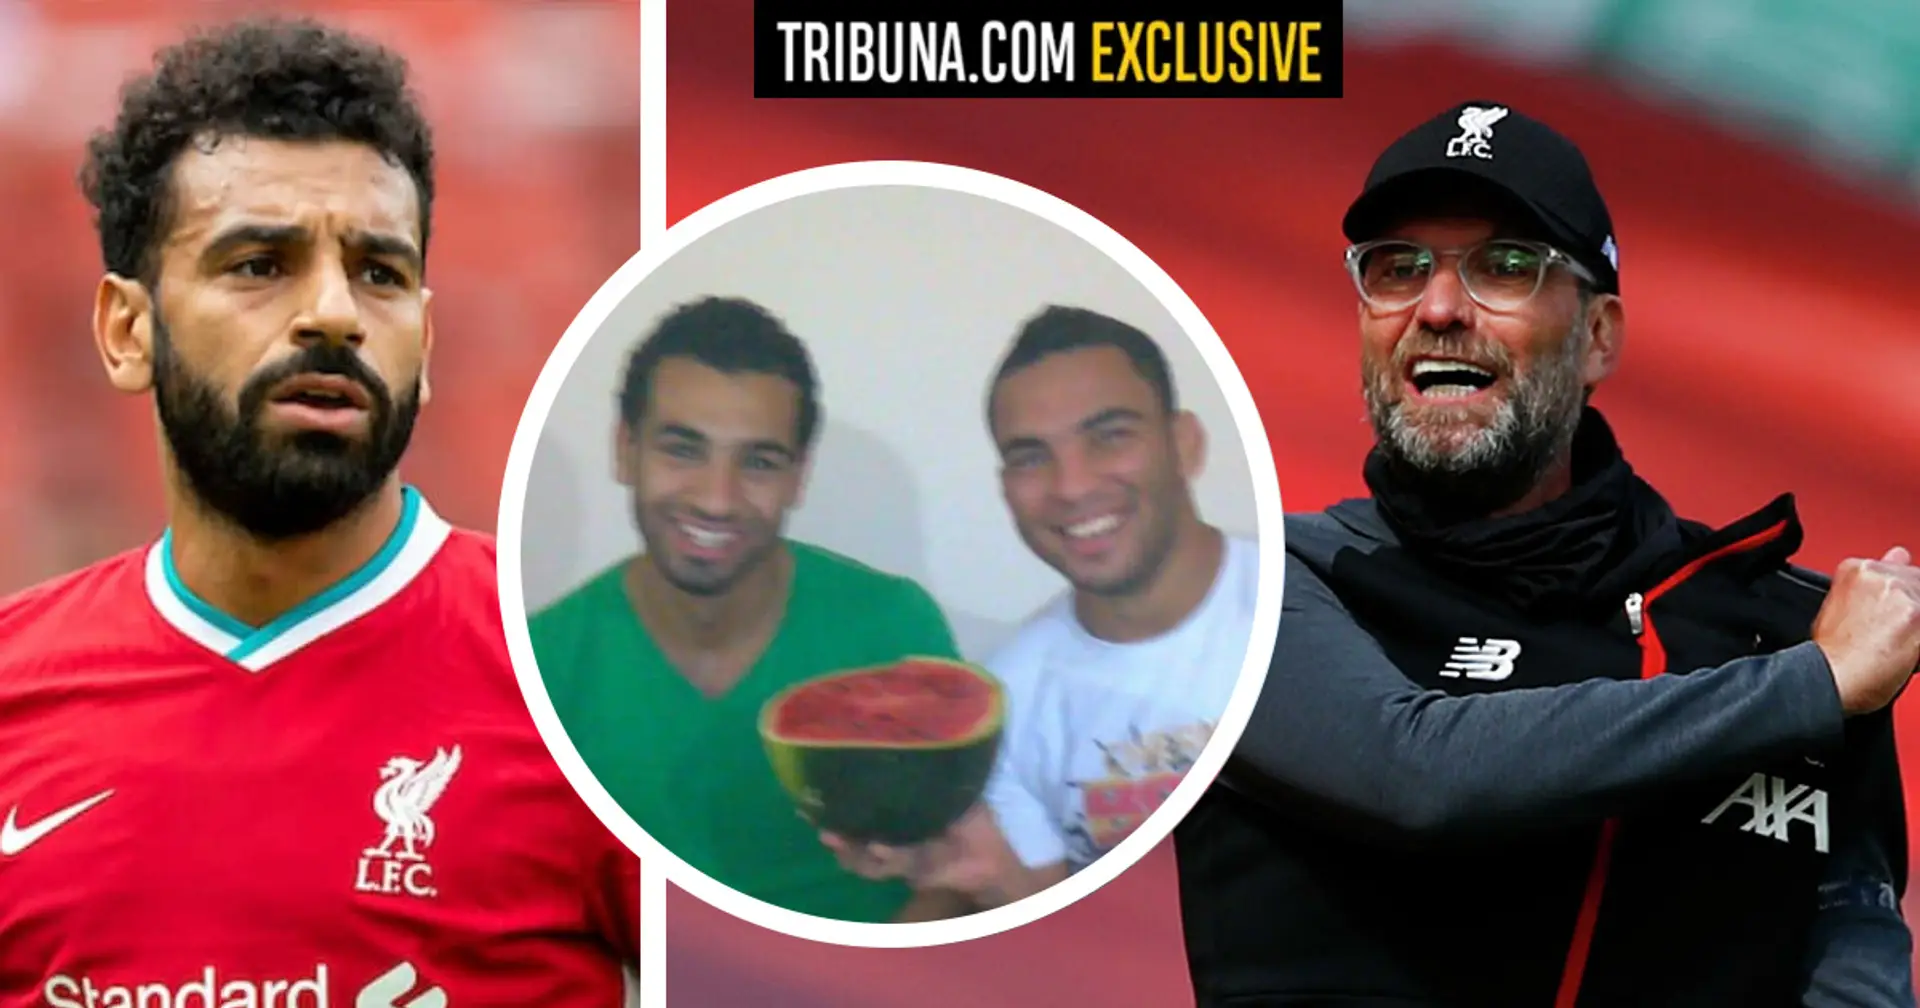 'Salah has no leadership traits, he’ll leave for new achievements': Mo's friend on Klopp, captaincy, Liverpool future — Tribuna.com exclusive